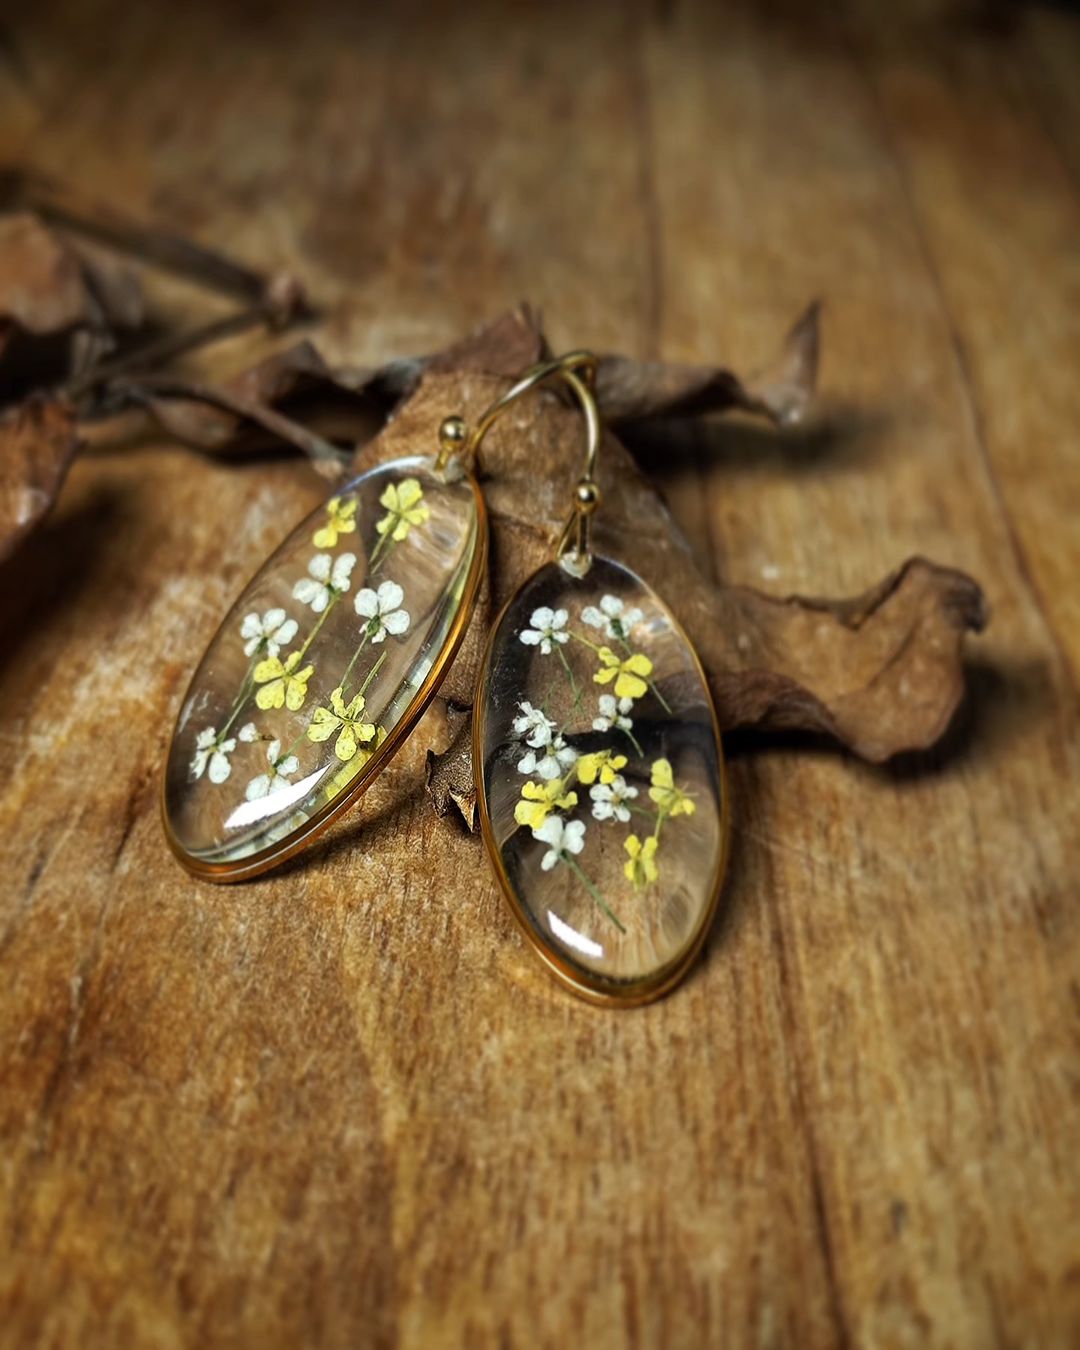 Fleeting Beauty Endures: The Tale of Preserved Dried Flower Earrings